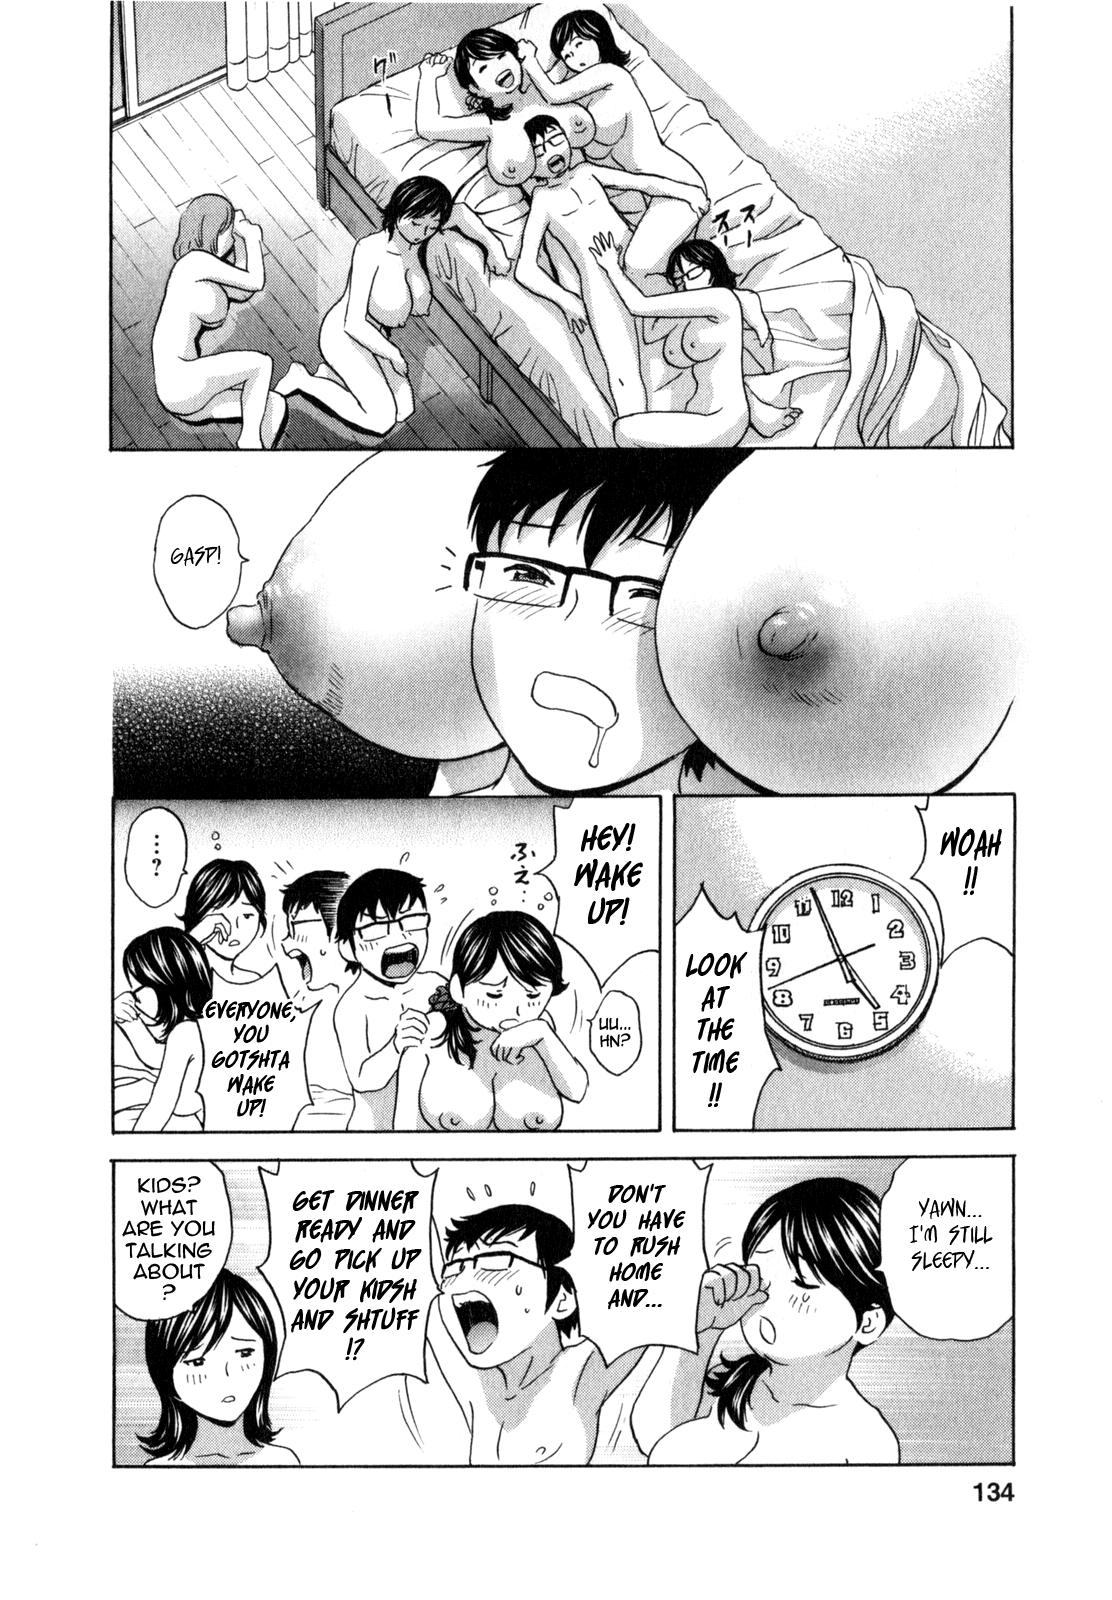 [Hidemaru] Life with Married Women Just Like a Manga 3 - Ch. 1-8 [English] {Tadanohito} 141